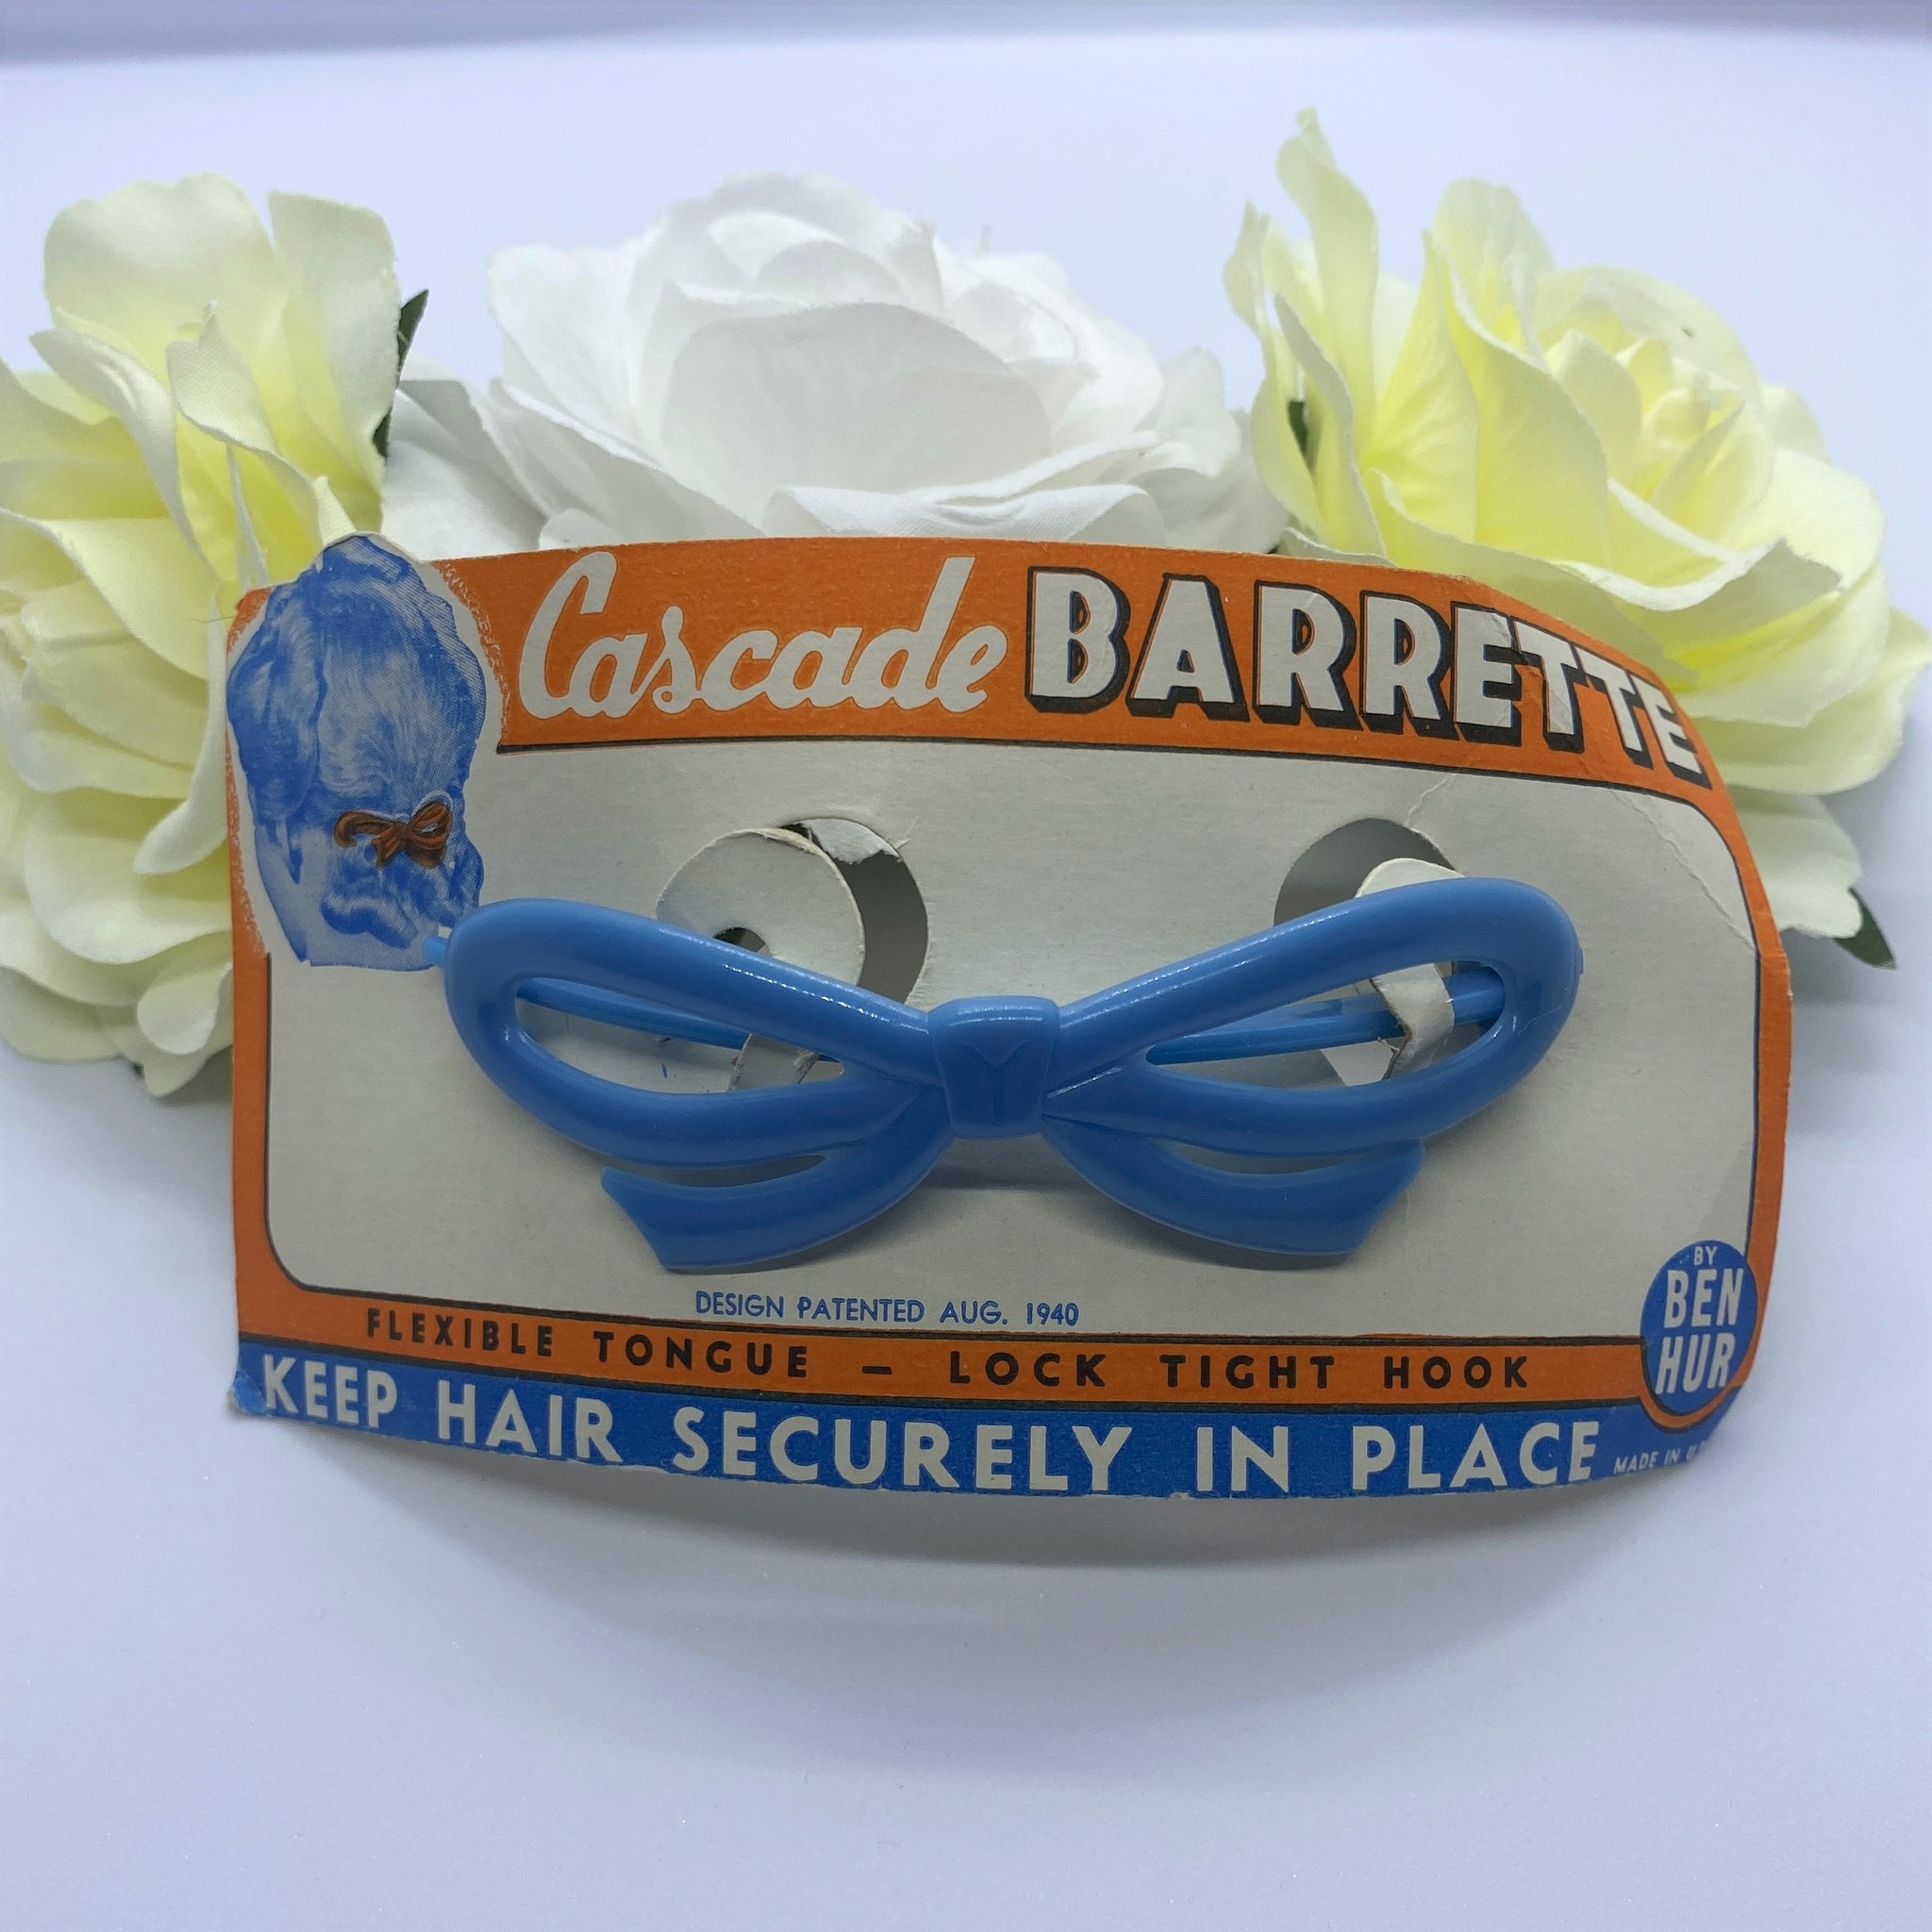 1950s Vintage Hair Barrette